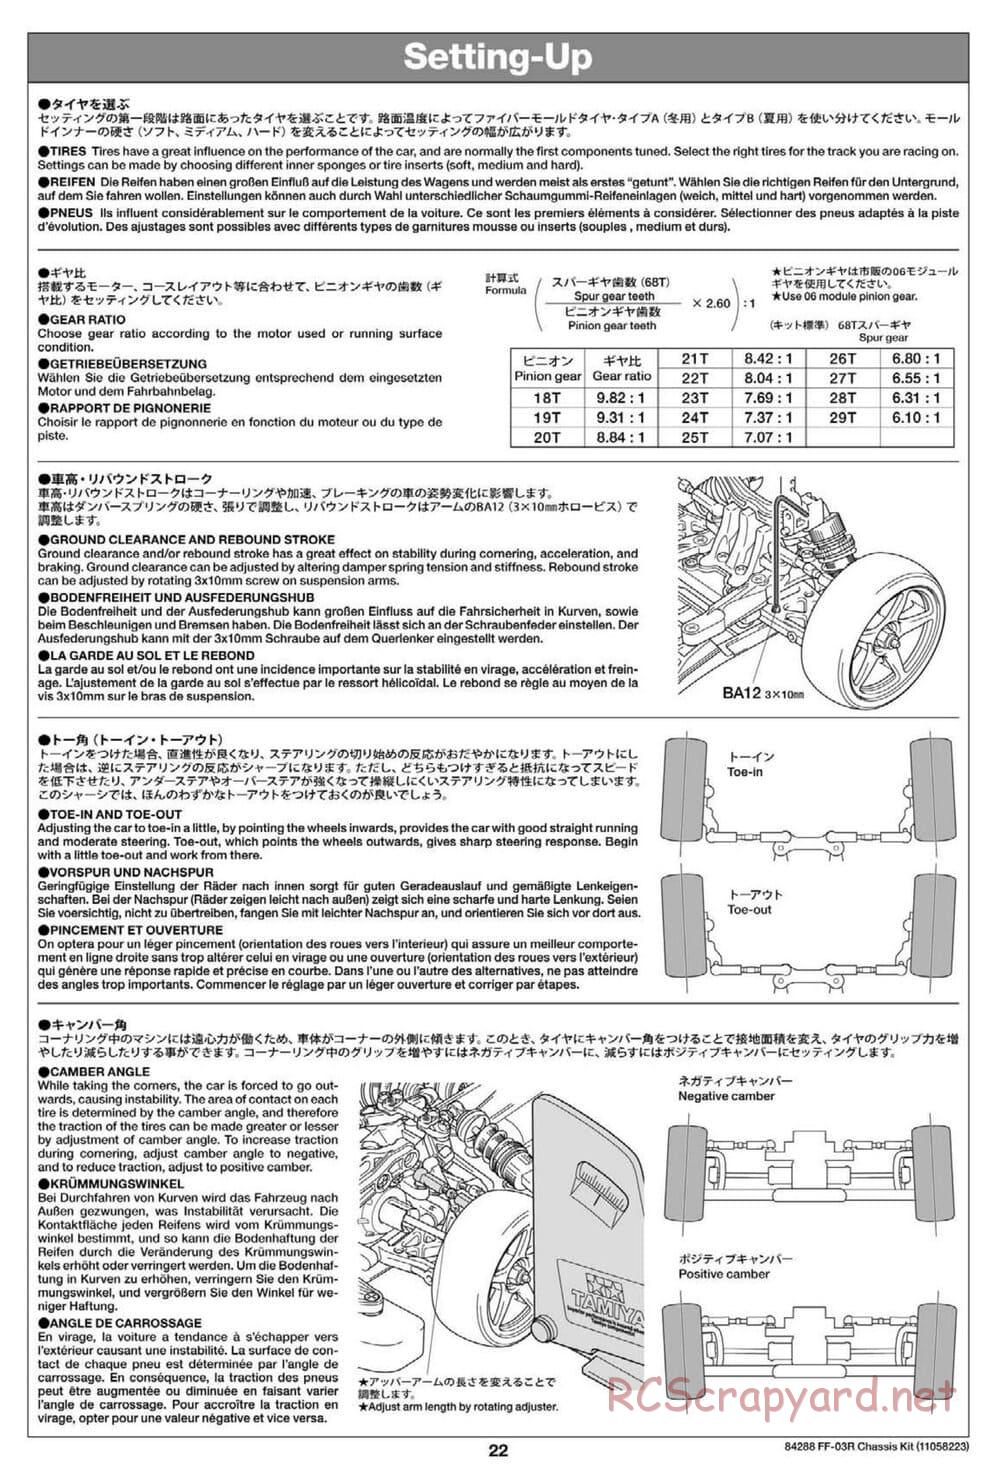 Tamiya - FF-03R Chassis - Manual - Page 24